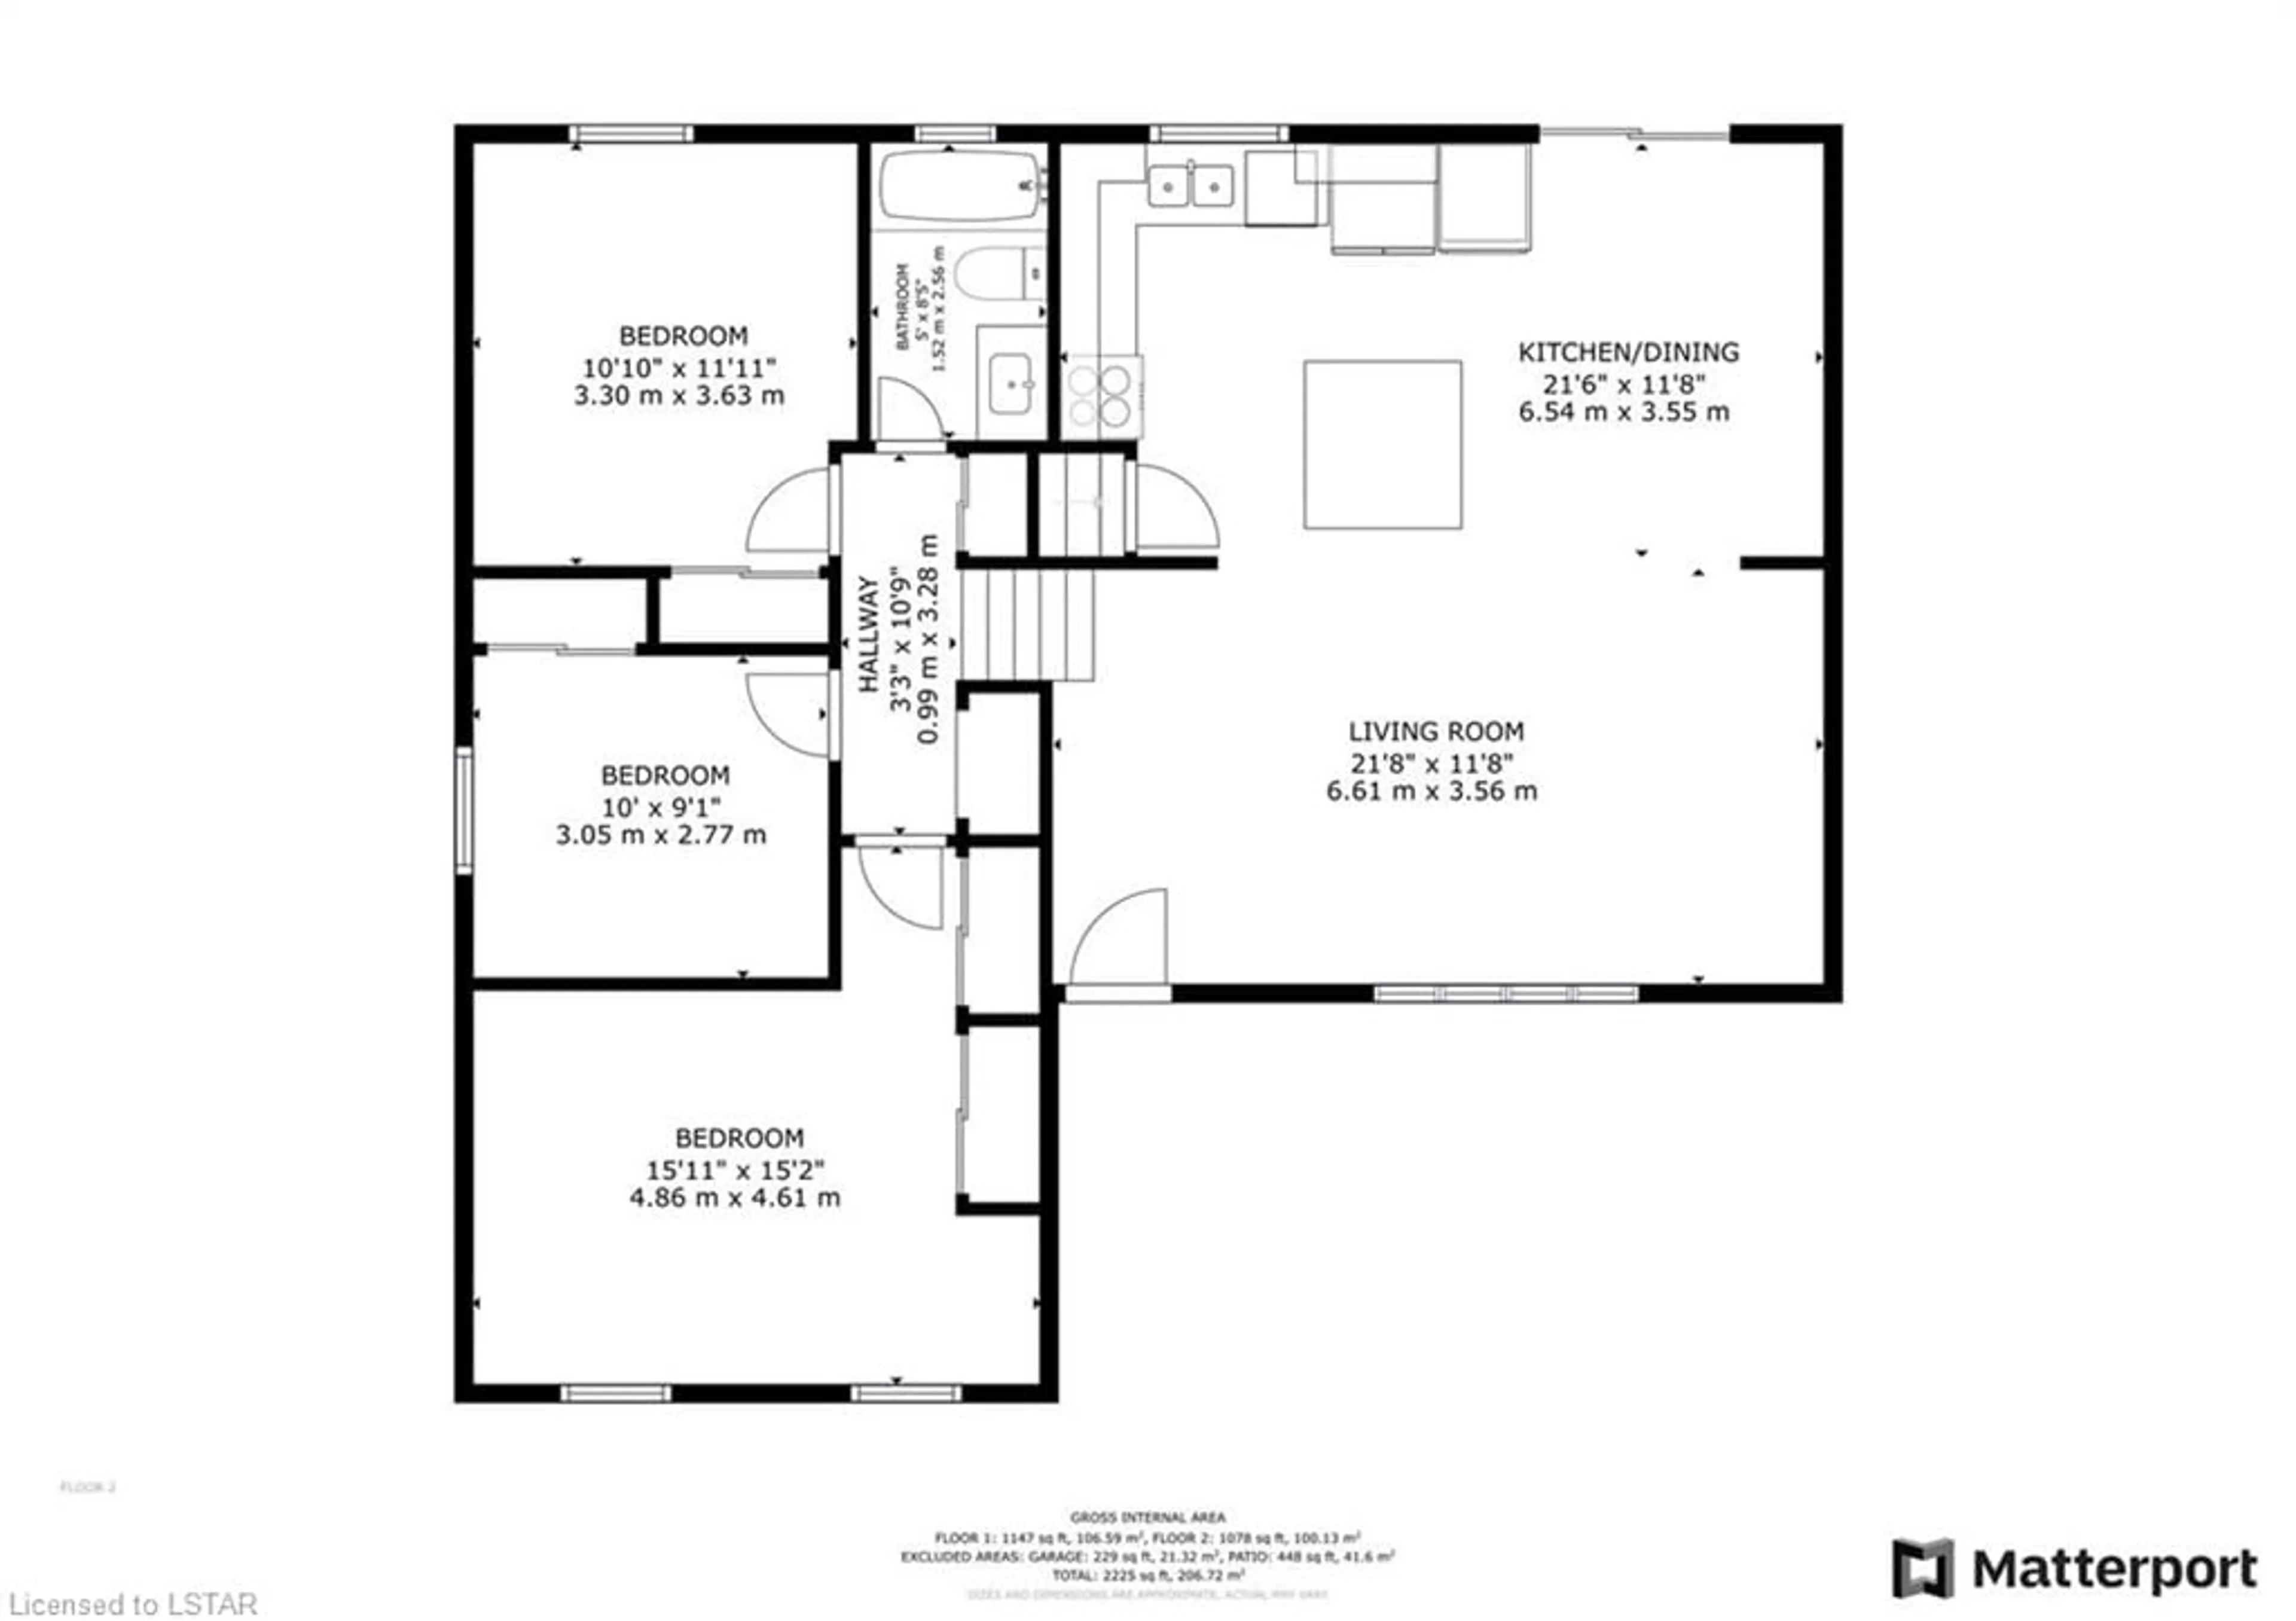 Floor plan for 353 Dominion St, Strathroy Ontario N7G 3G9